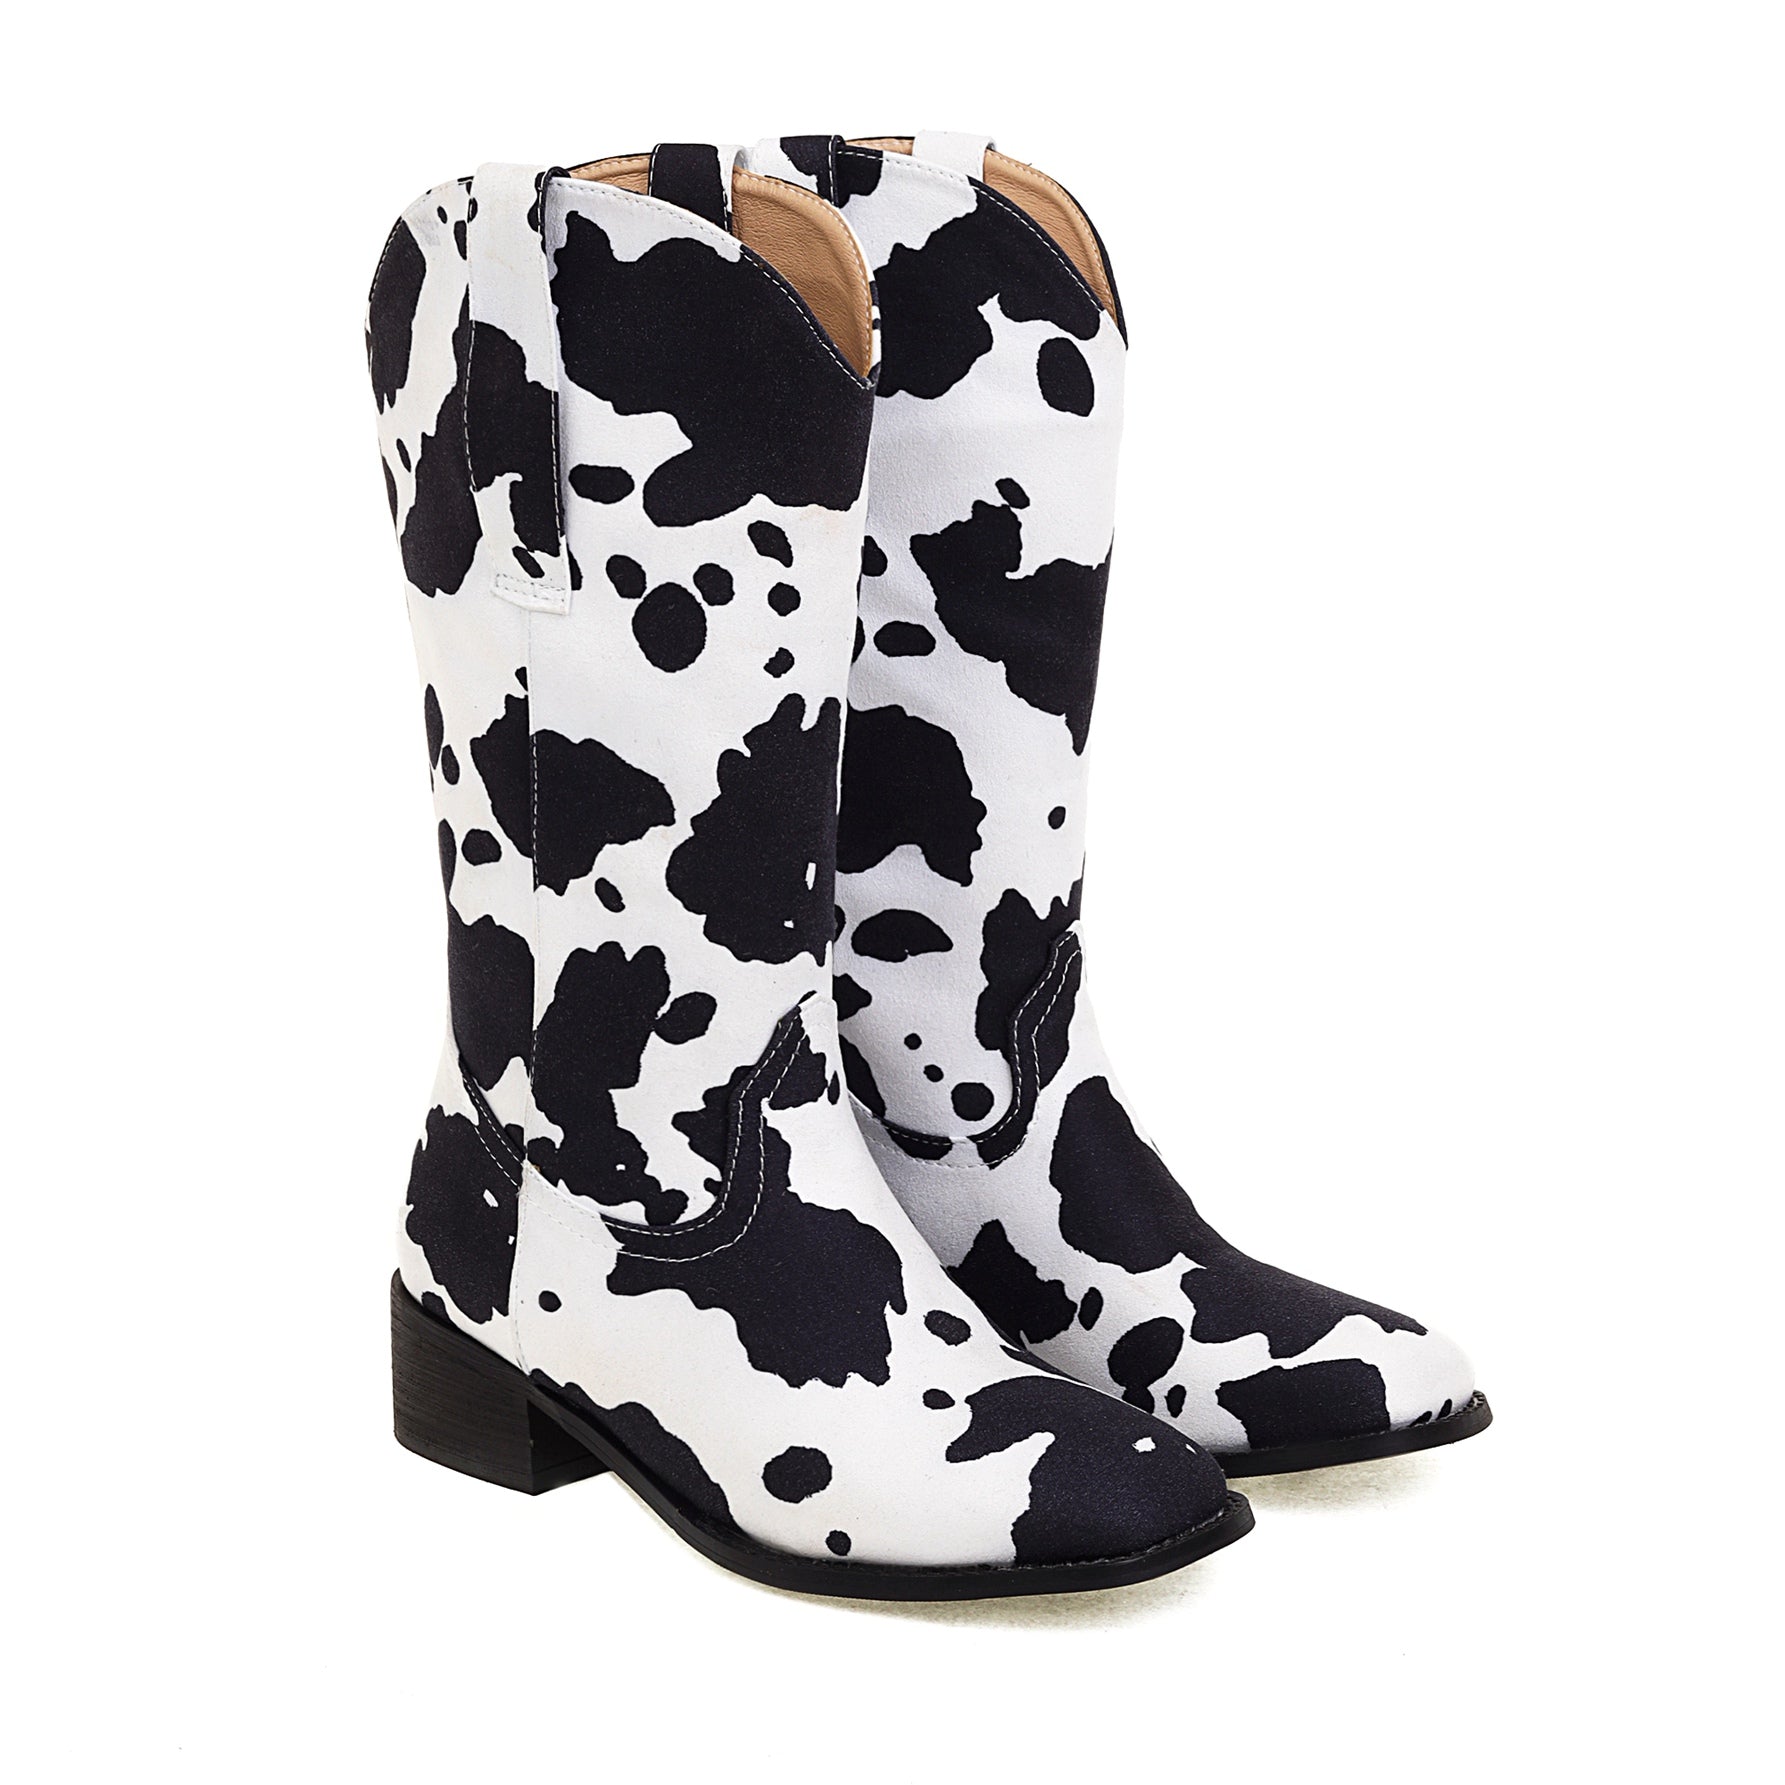 Bigsizeheels Western vintage Cow pattern boots - White/Black freeshipping - bigsizeheel®-size5-size15 -All Plus Sizes Available!